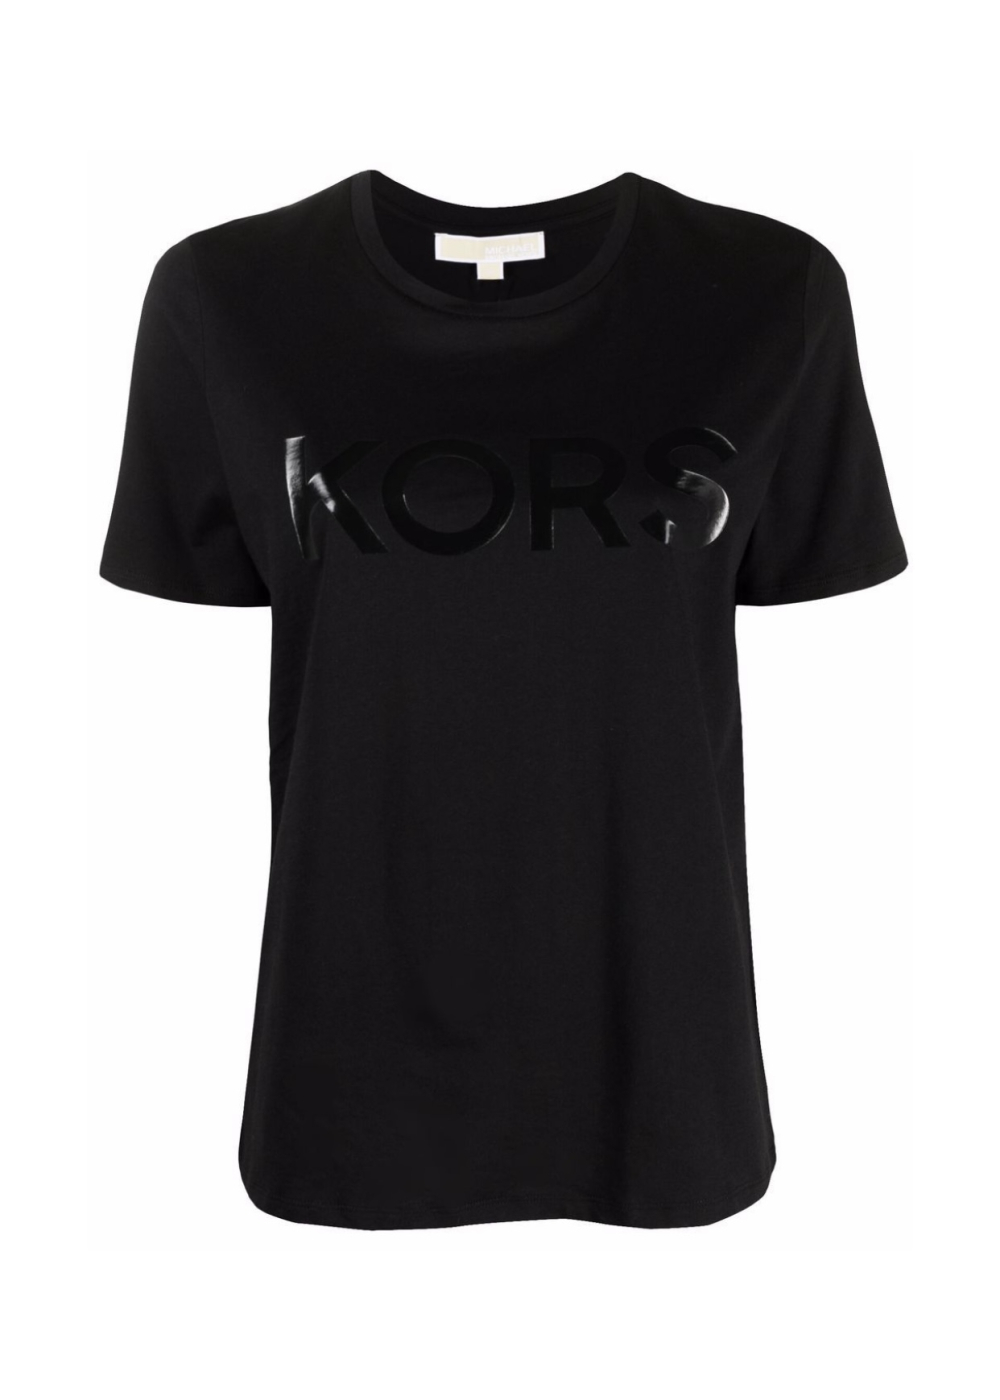 MICHAEL KORS camiseta manga corta negra con  logotipo